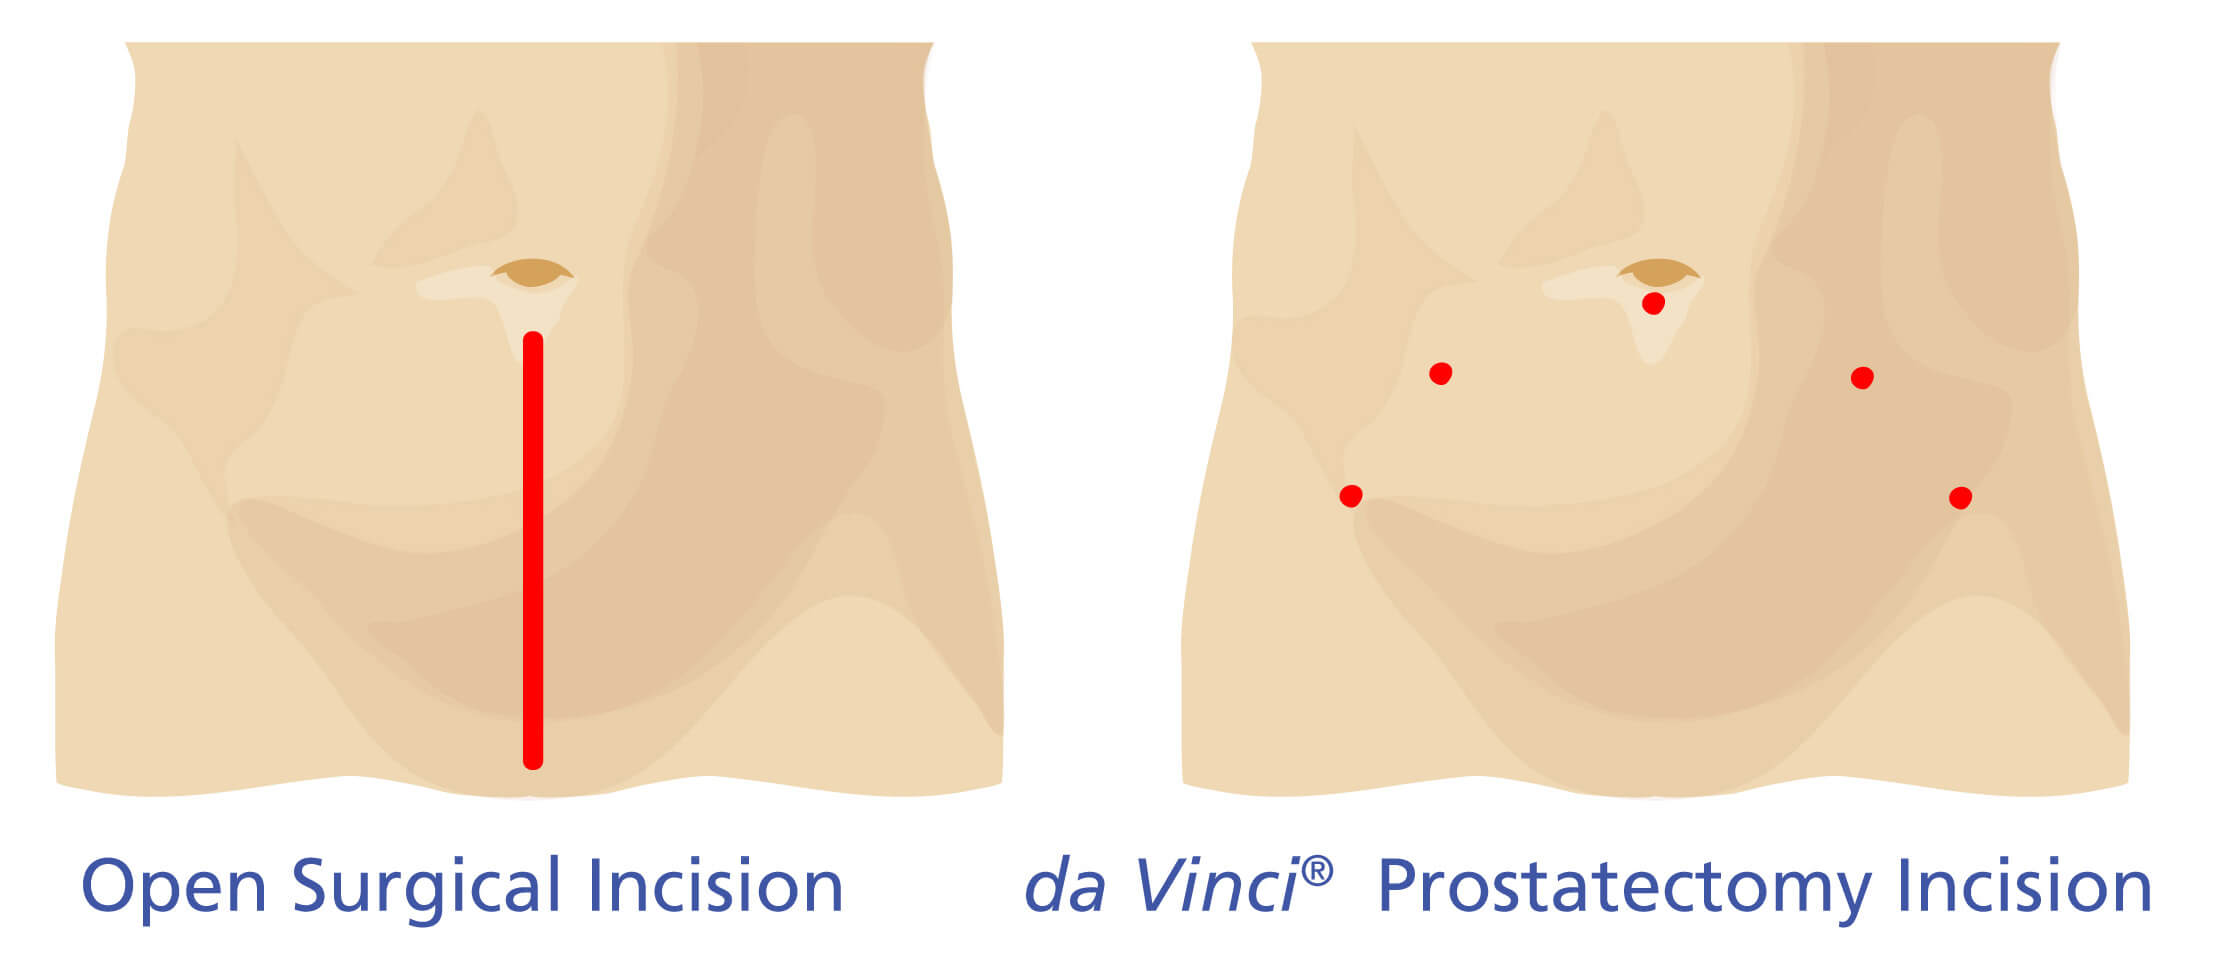 Prostatectomy: open surgical incision vs da Vinci prostatectomy incision